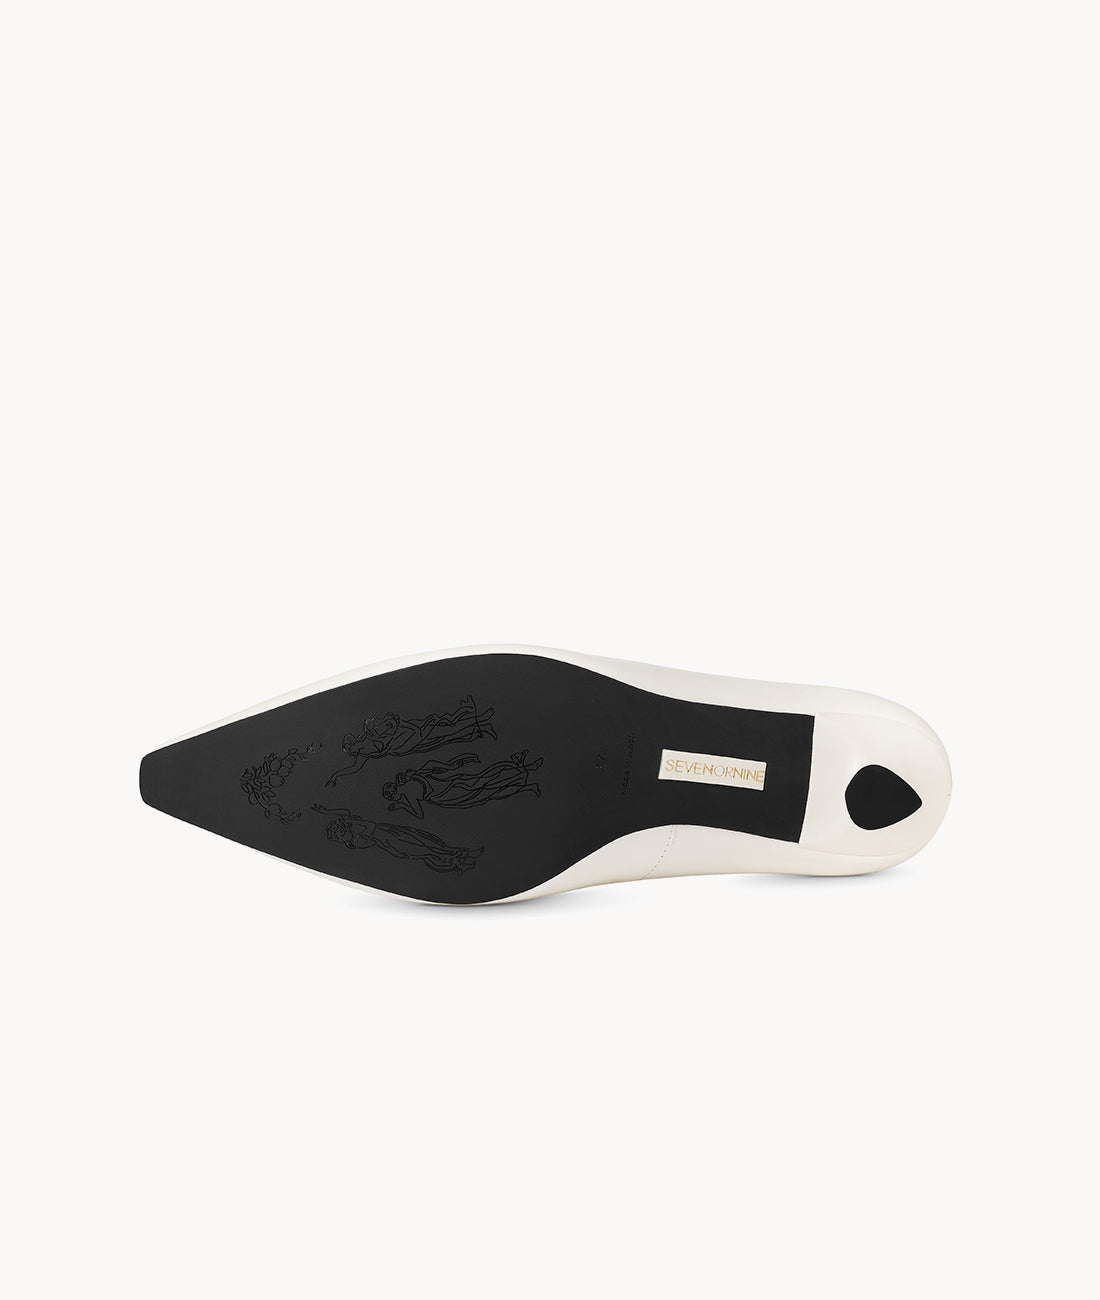 Mist black label series creamy white Luxury pump with 70mm Spool Heel